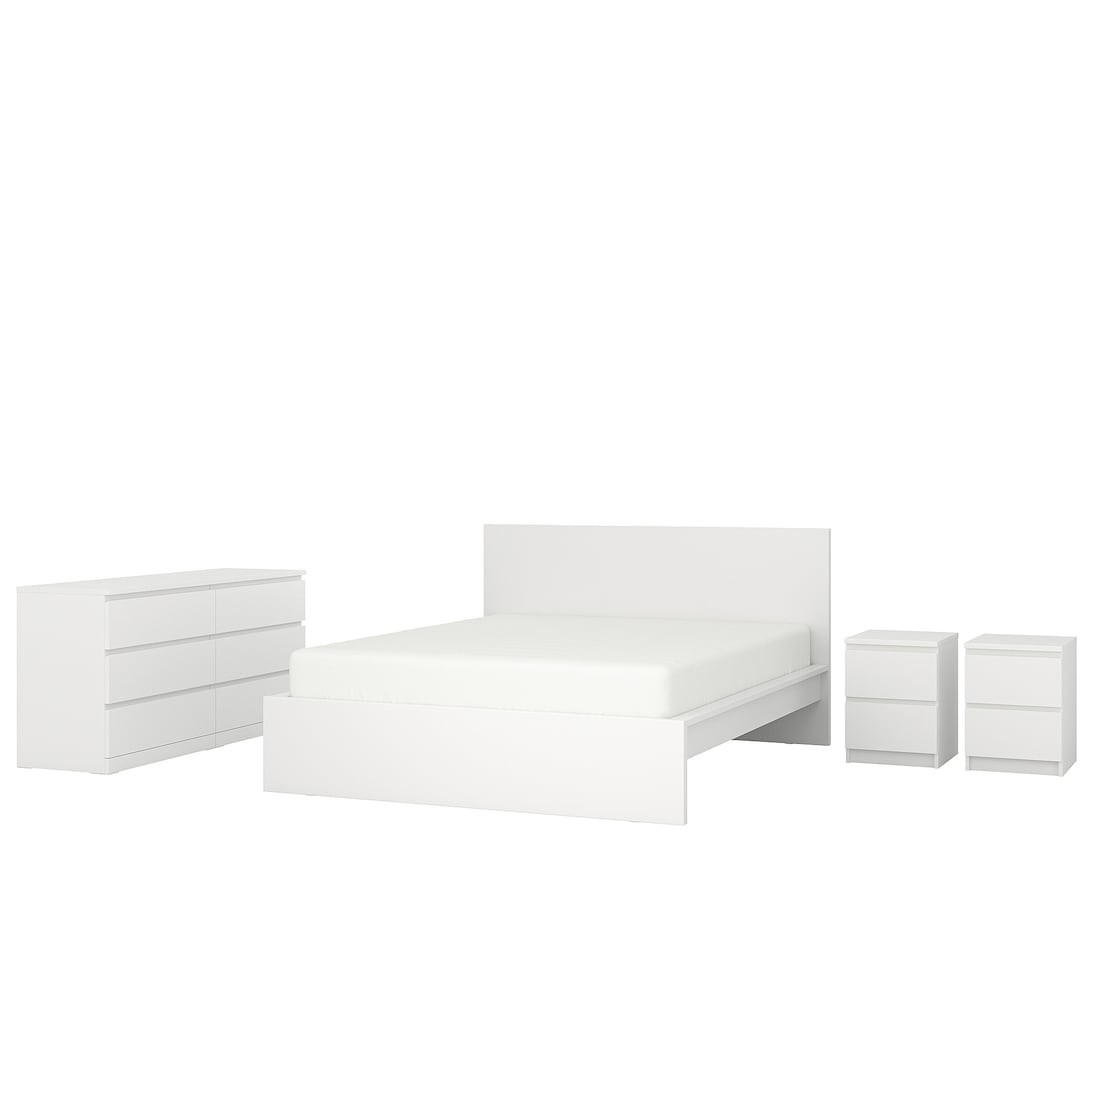 IKEA MALM МАЛЬМ Набор мебели для спальни 4 шт, белый, 180x200 см 39488231 394.882.31